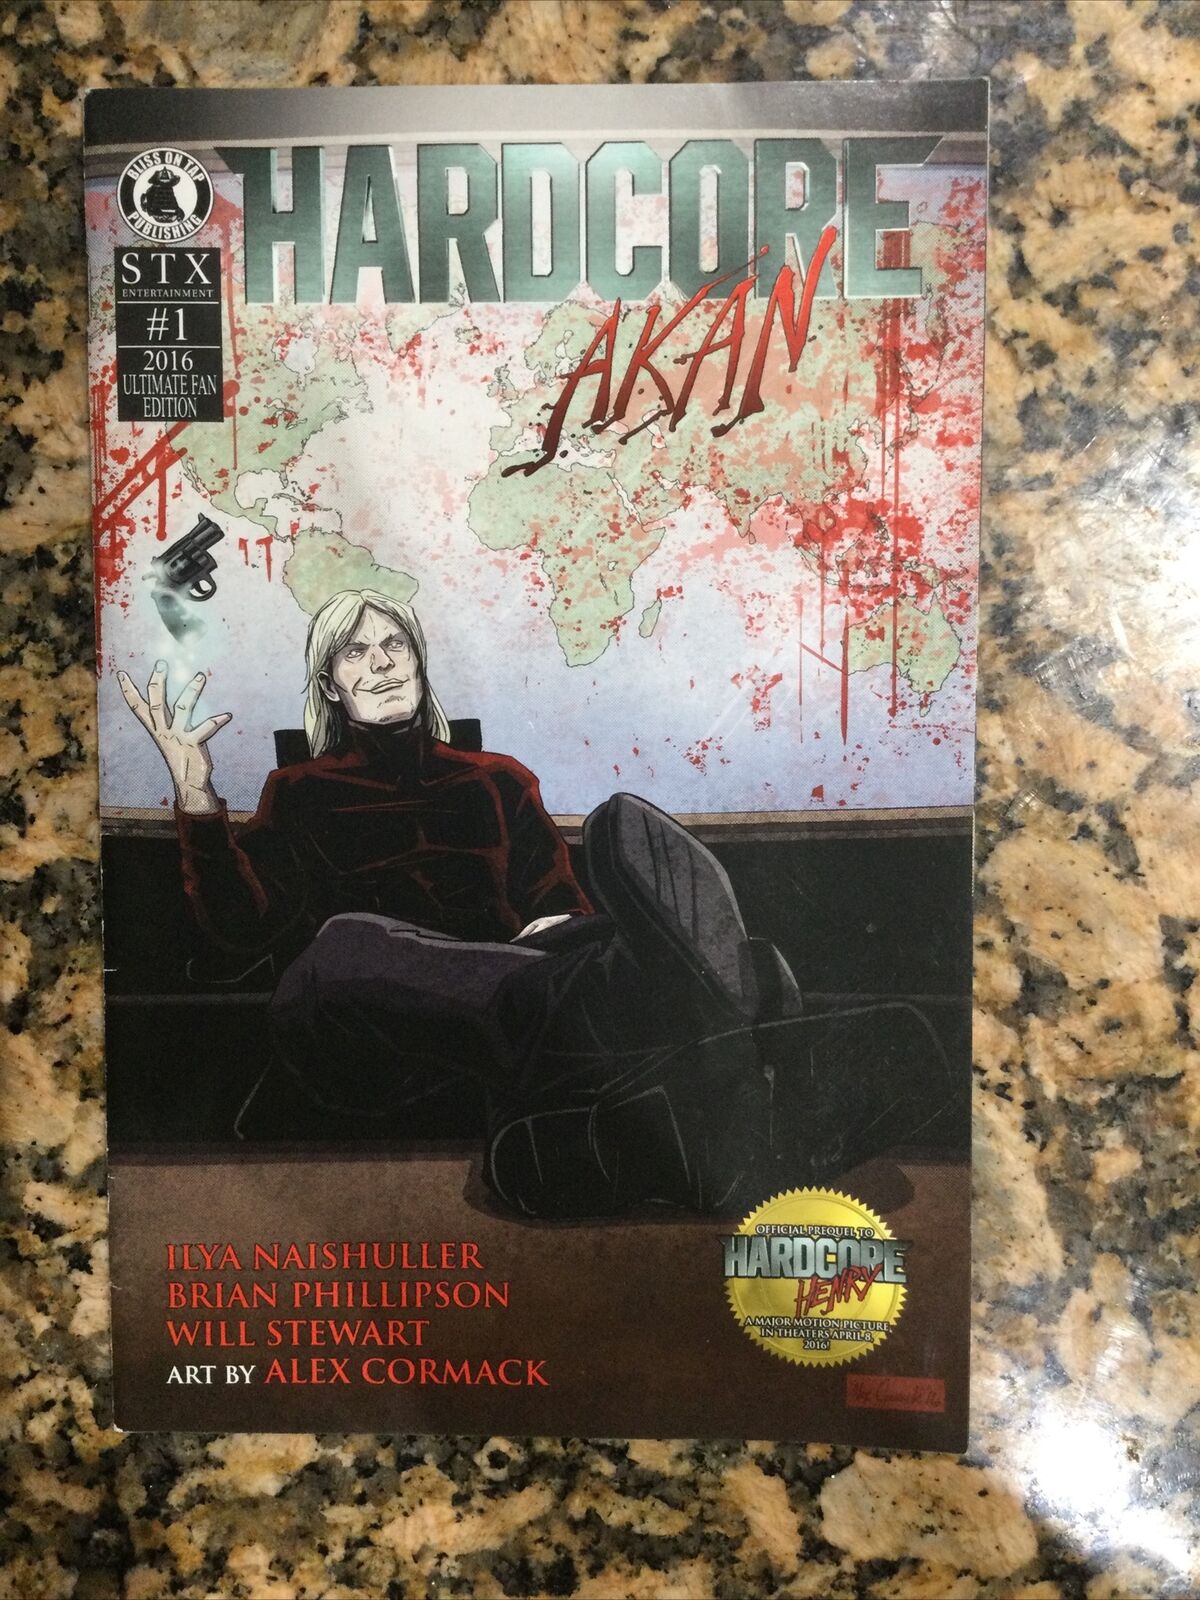 New STX Hardcore Akan Comic (Hardcore Henry) 2016 Ultimate Fan Edition issue #1